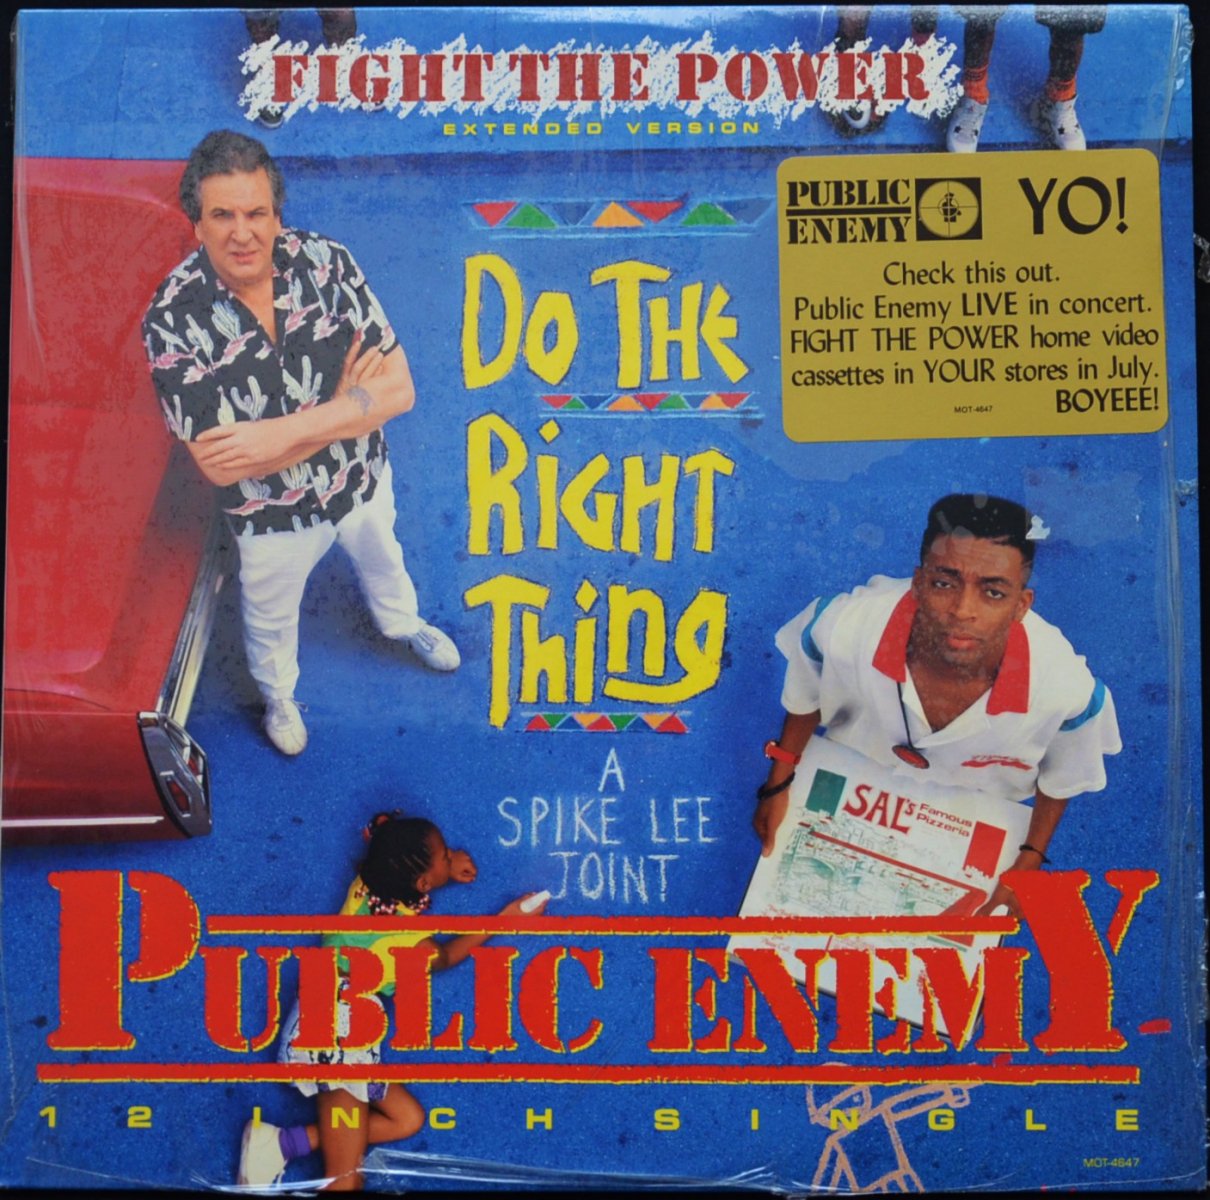 Public Enemy – Fight The Power